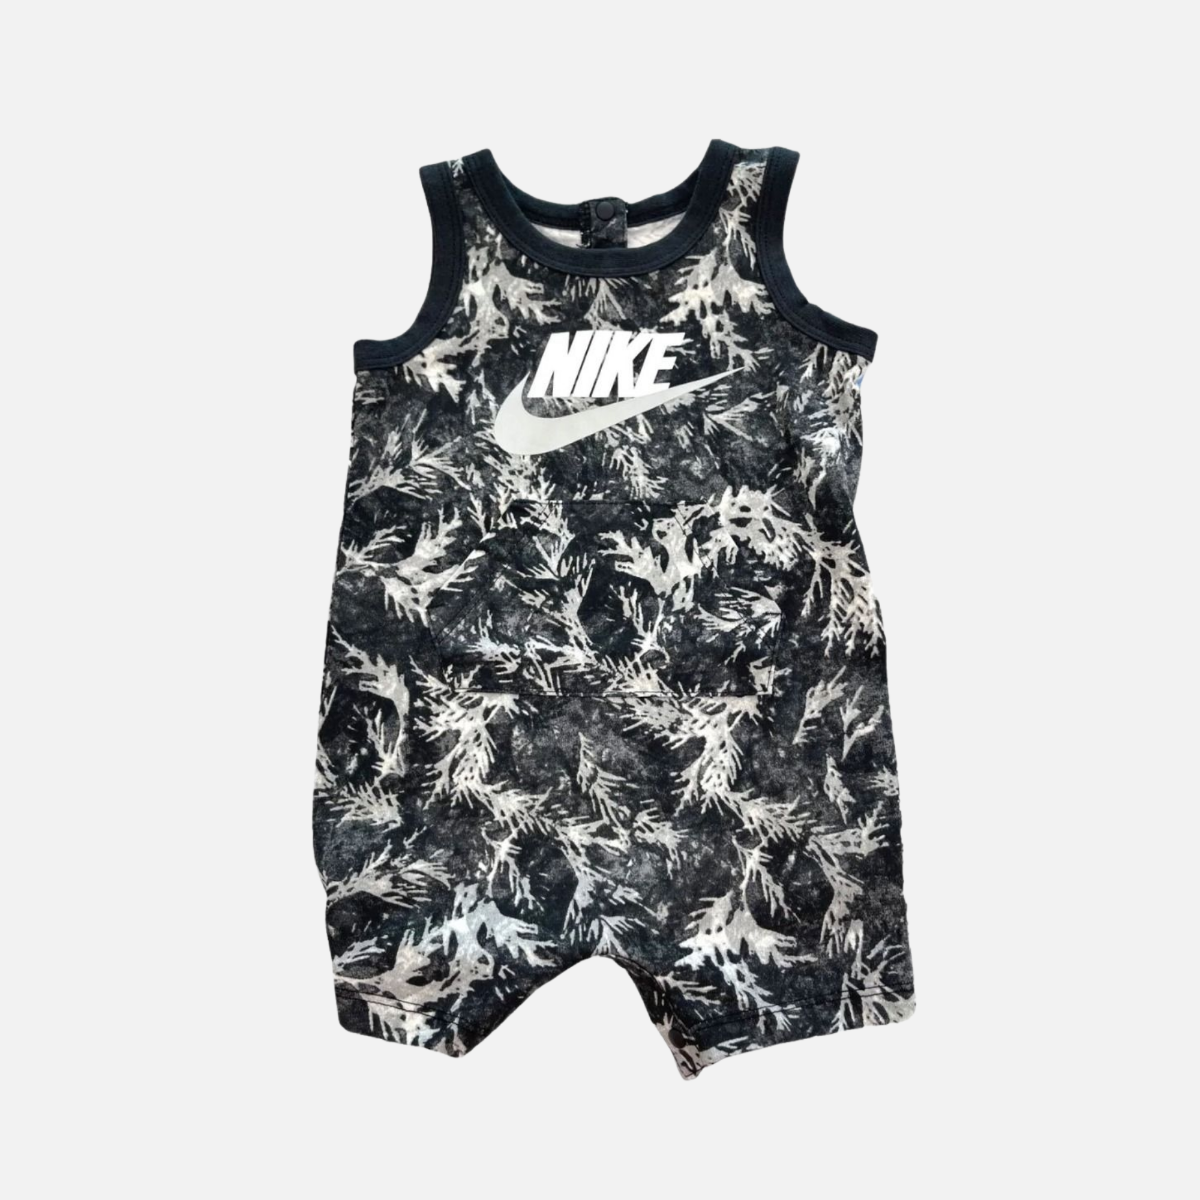 Barboteuse Nike Sportswear Leaf Dye Bébé - Noir/Blanc